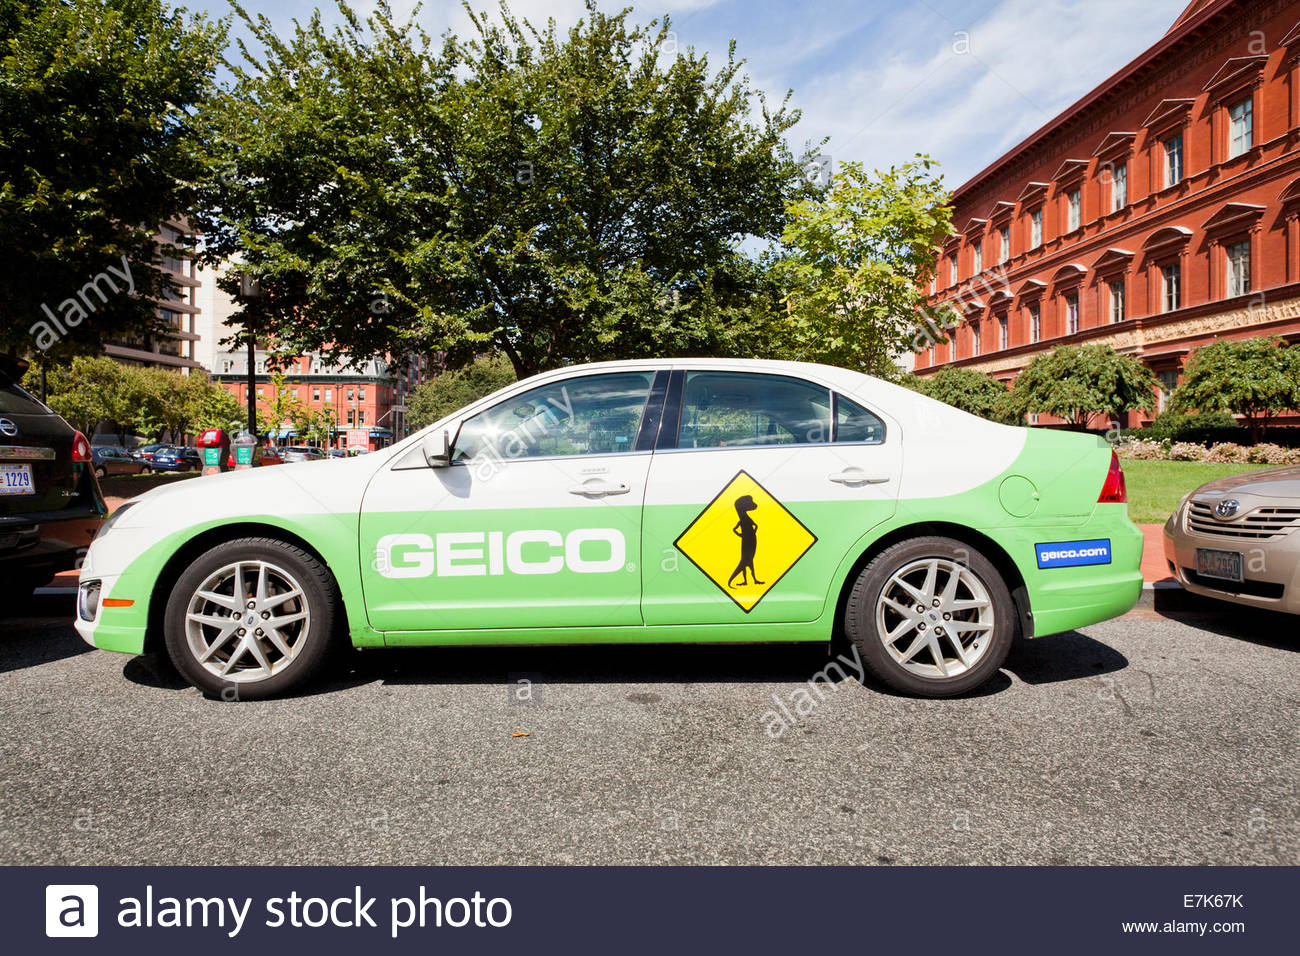 Geico Insurance Company Car Washington Dc Usa Stock Photo intended for size 1300 X 956